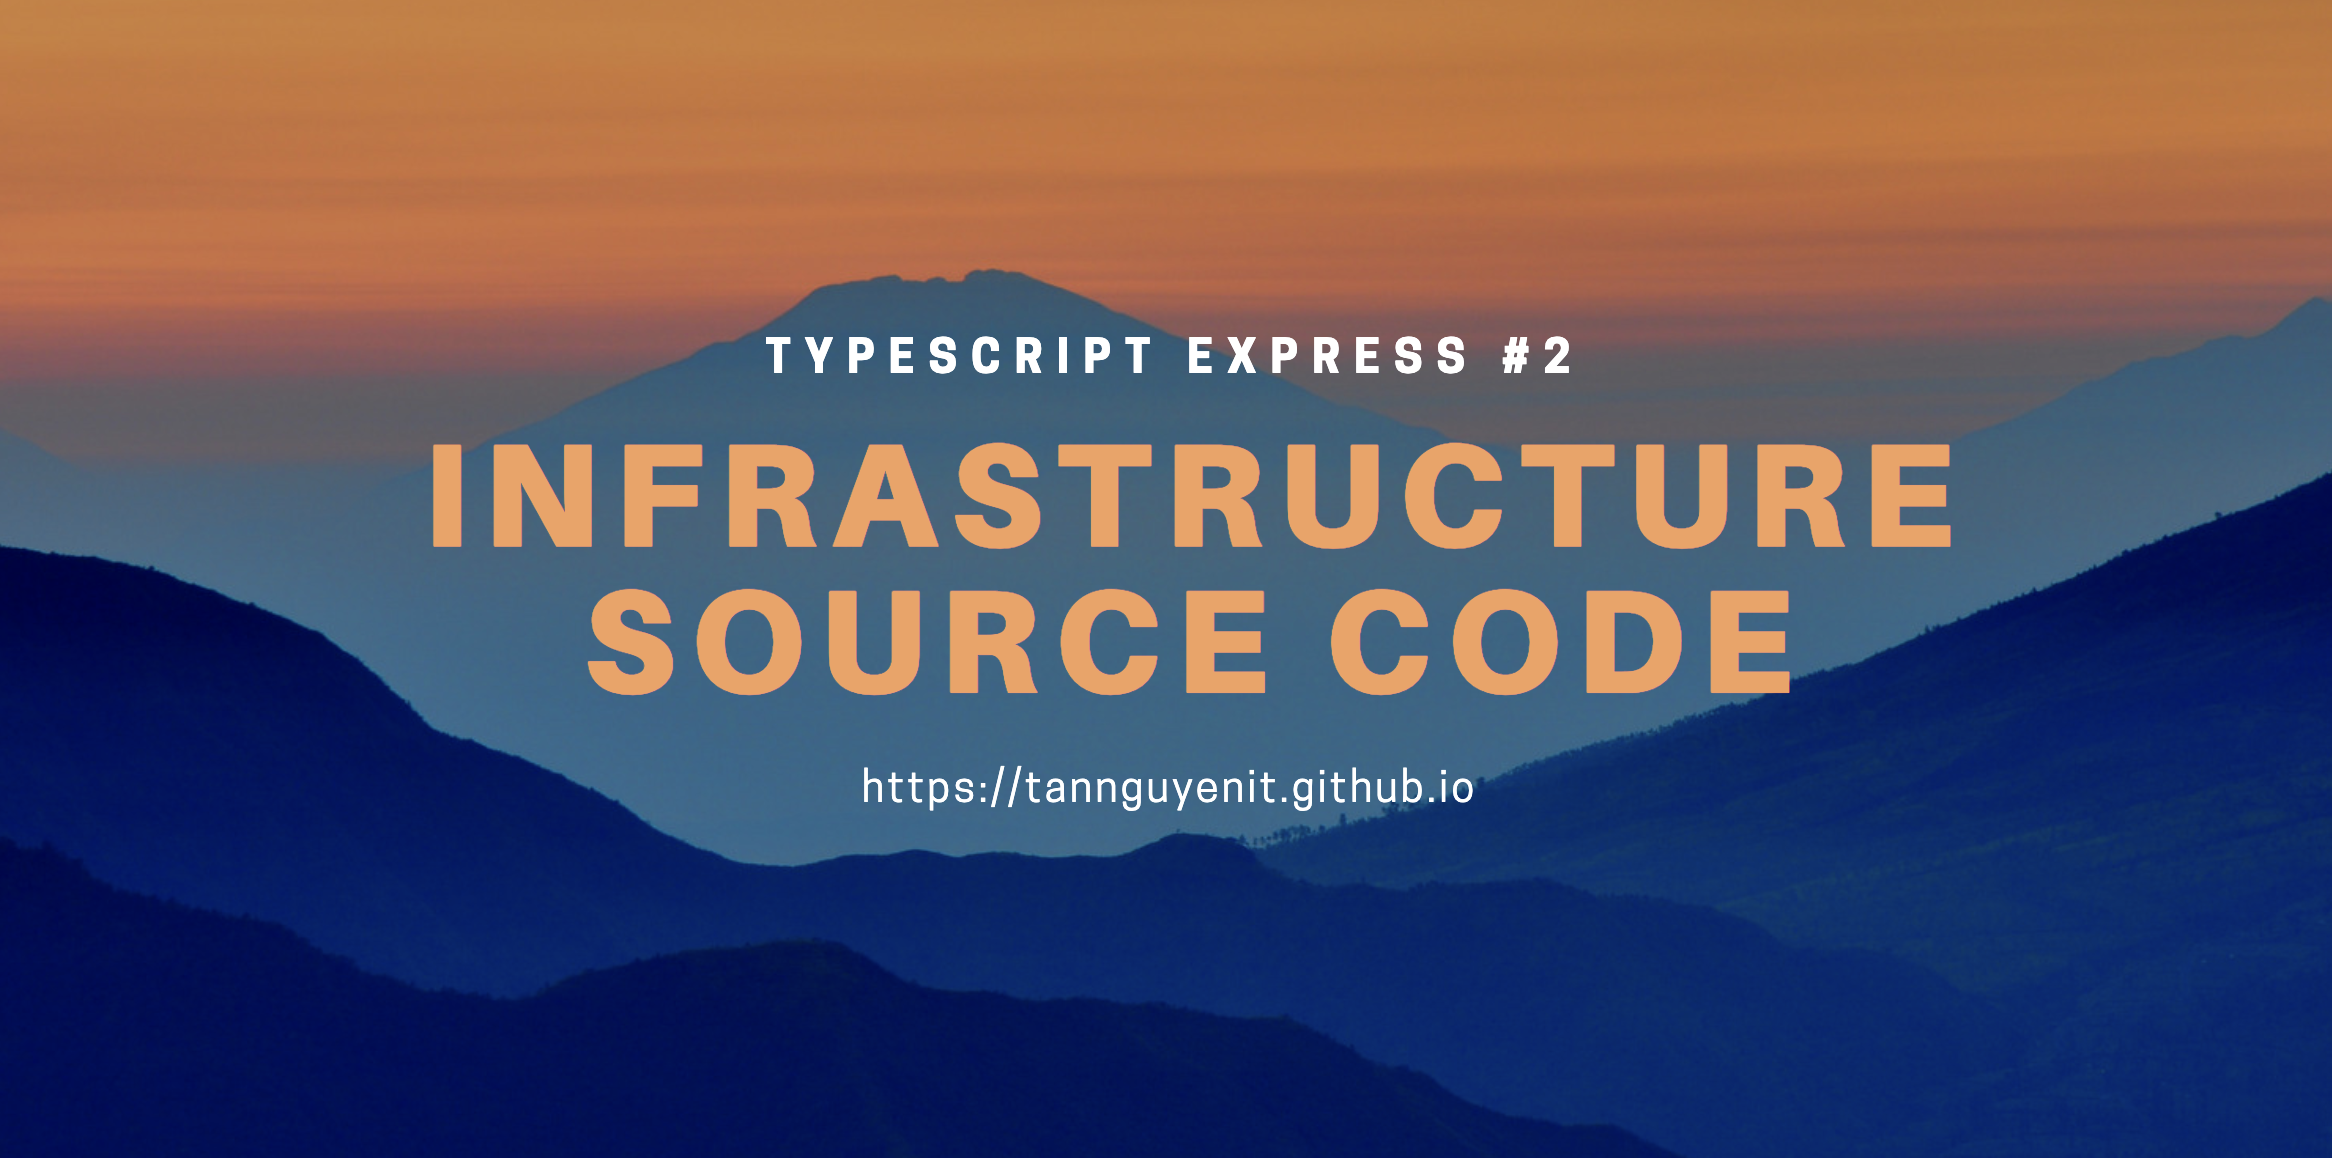 Typescript Express #2 Build Infrastructure Source Code